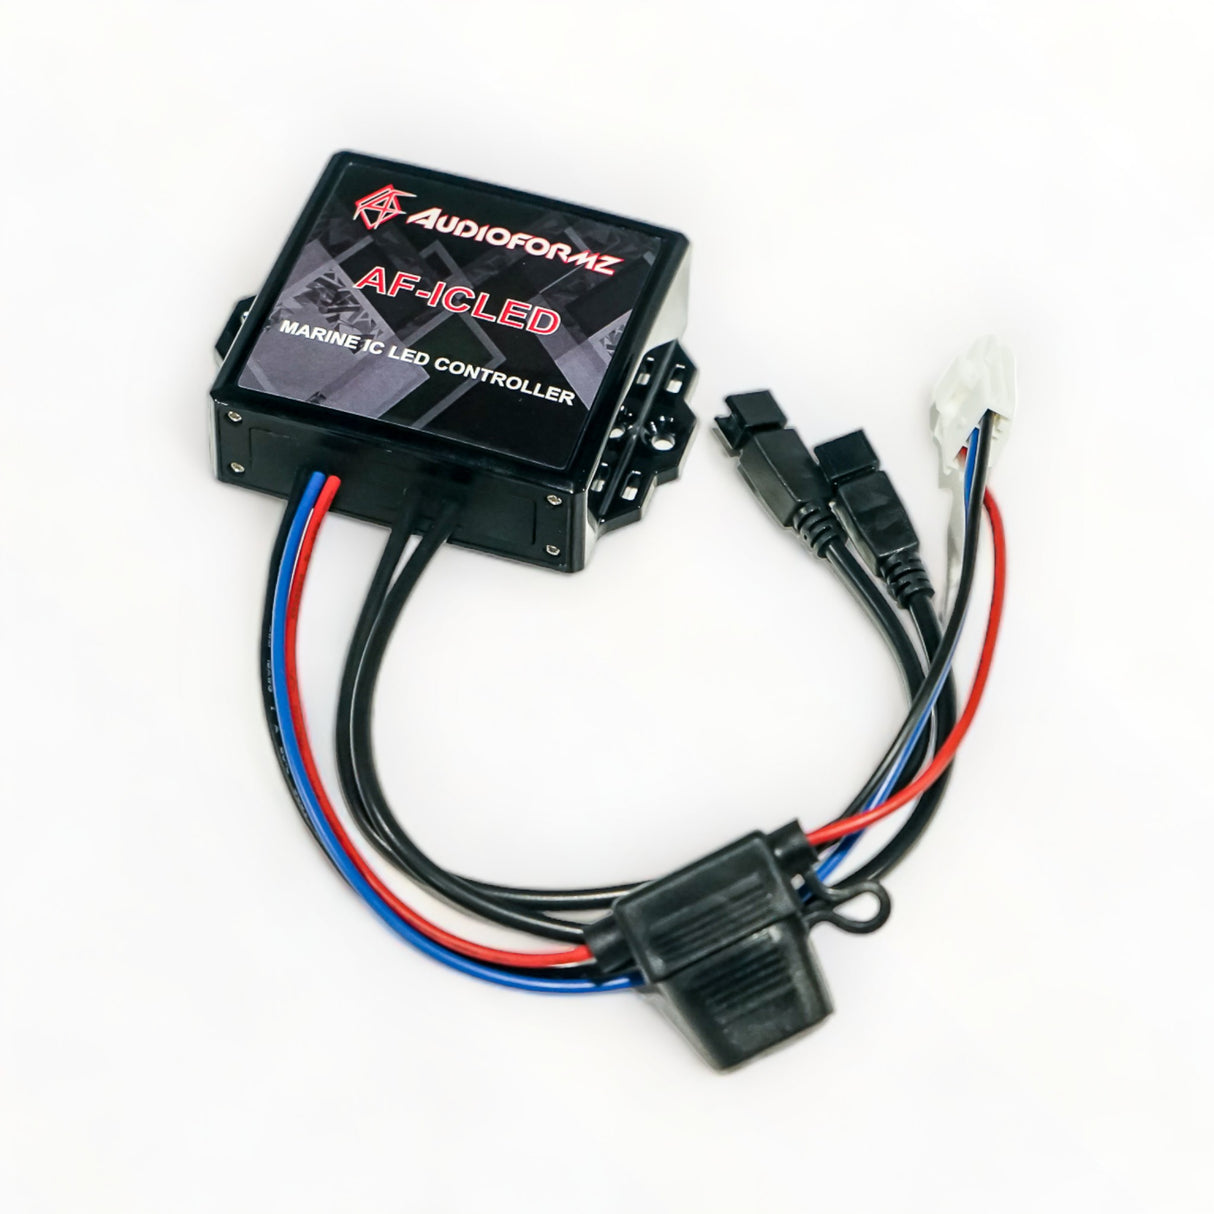 AudioFormz IC LED Controller